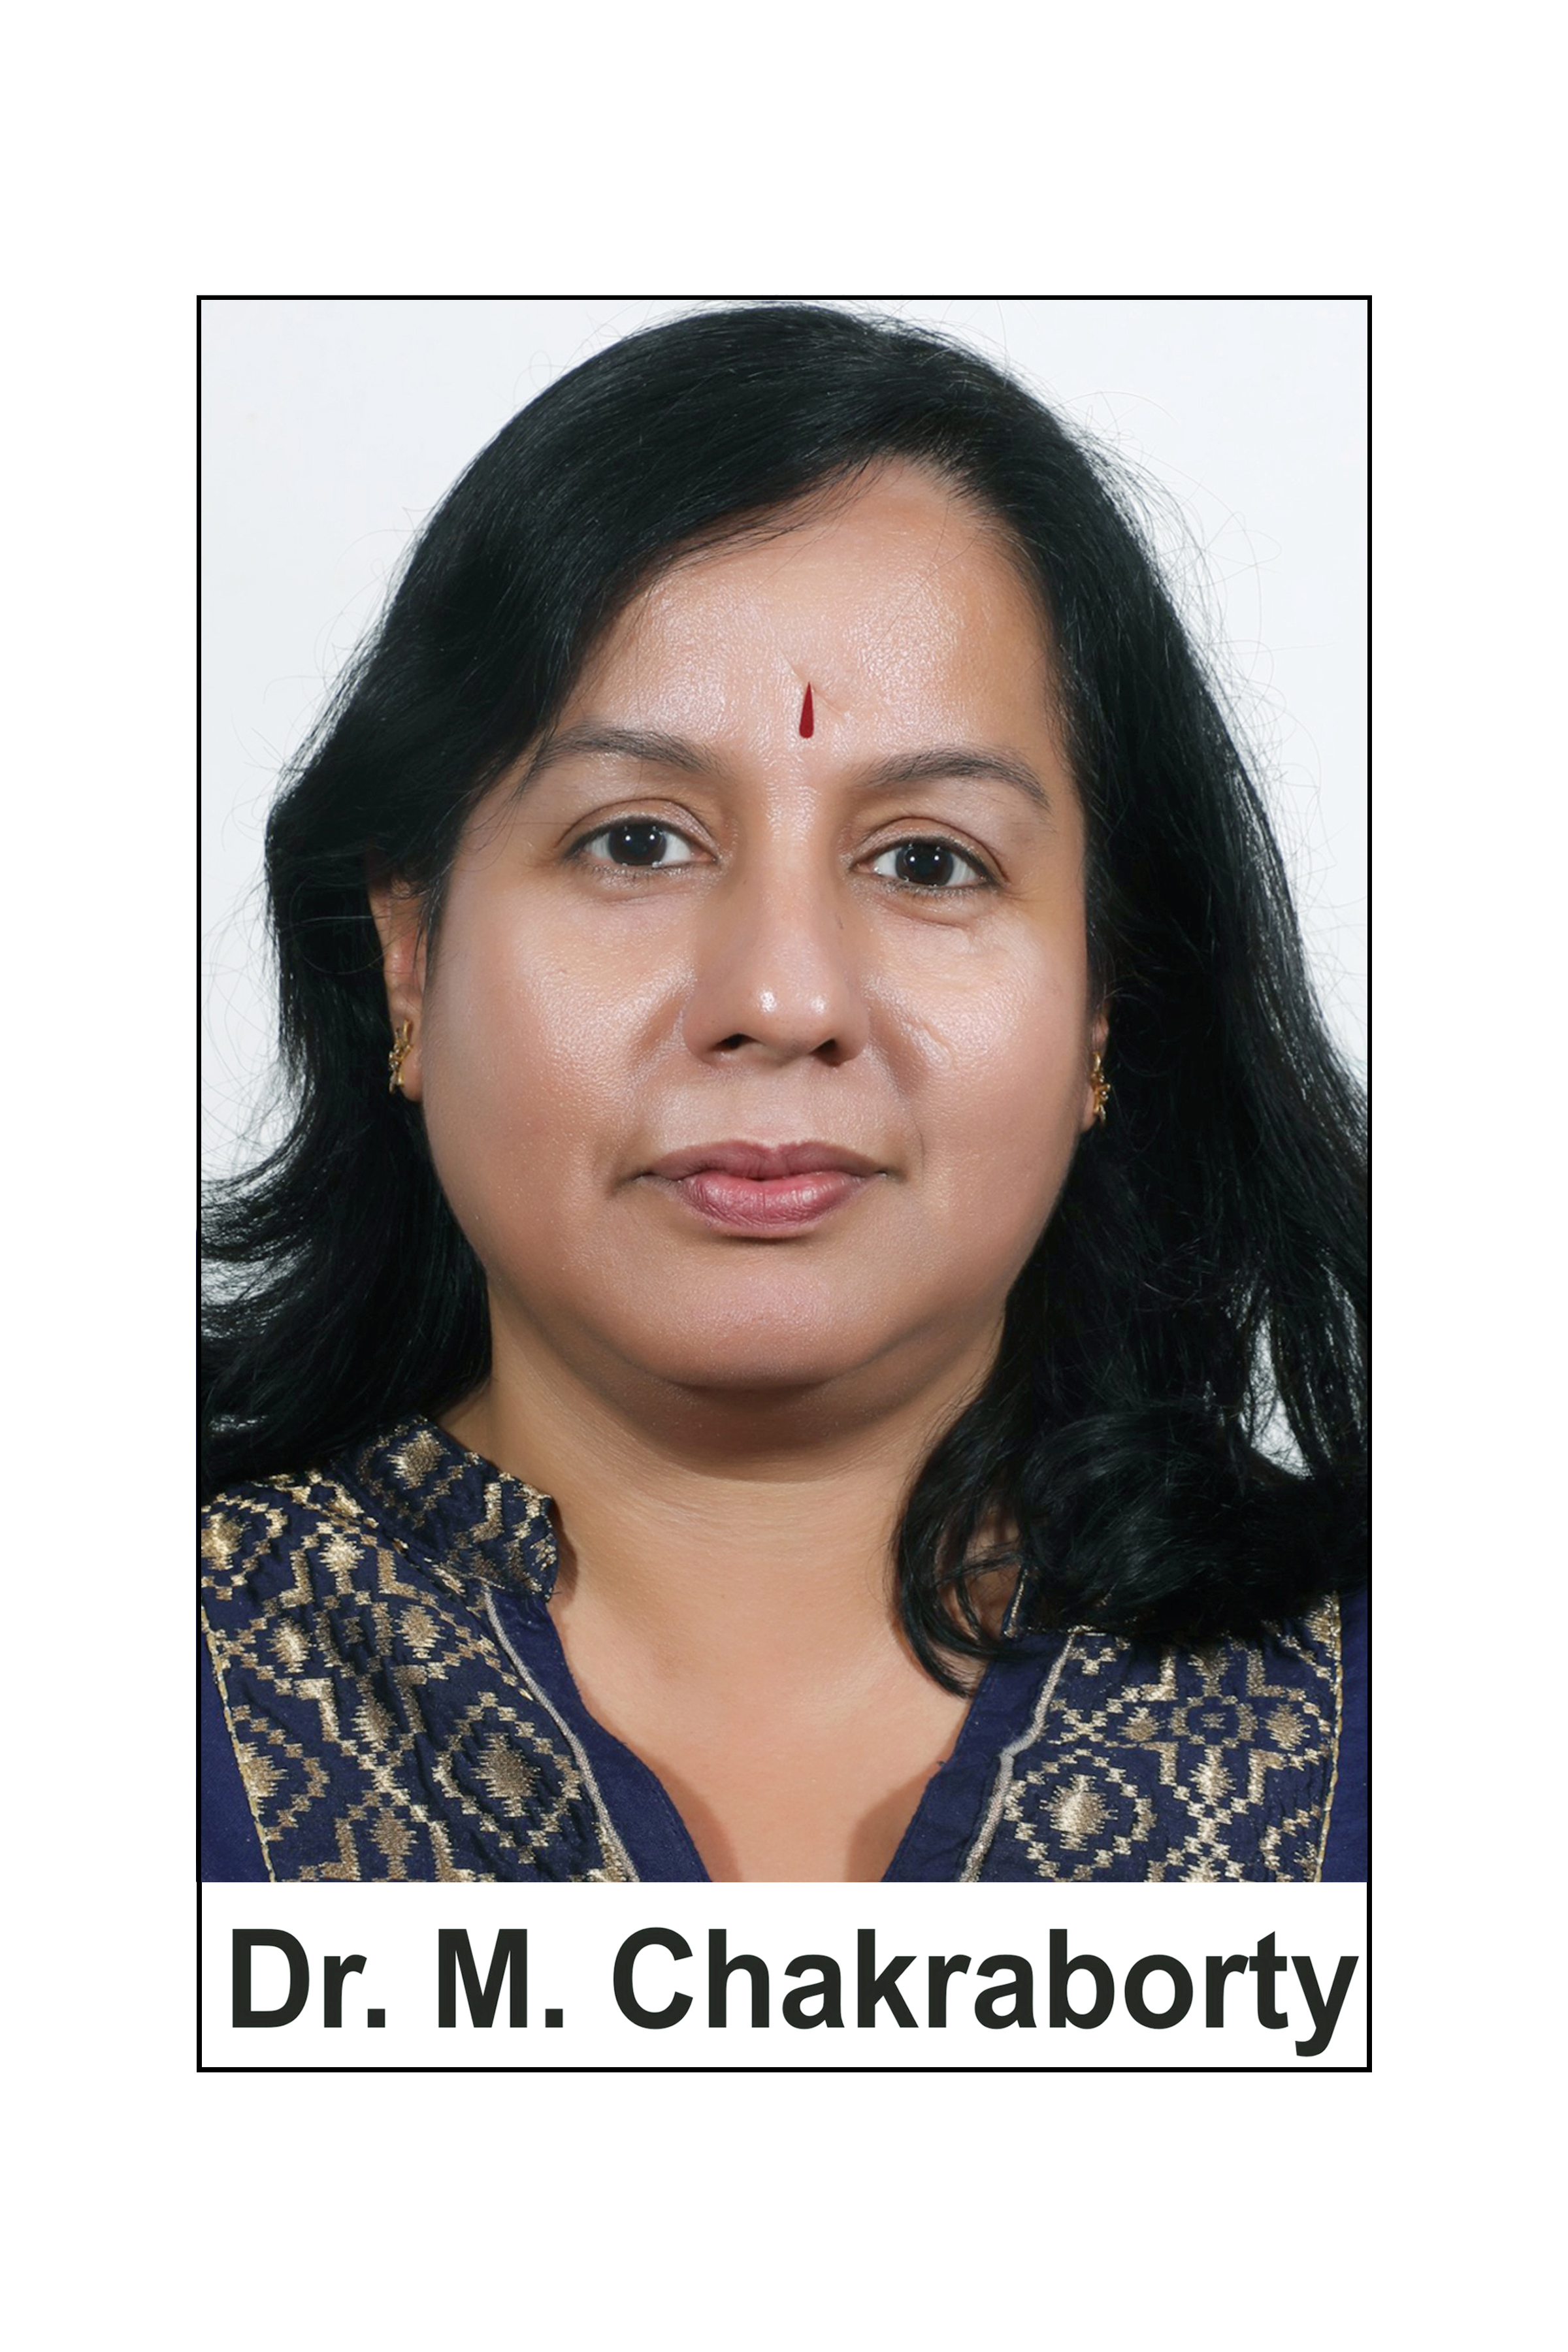 Dr. M. Chakraborty